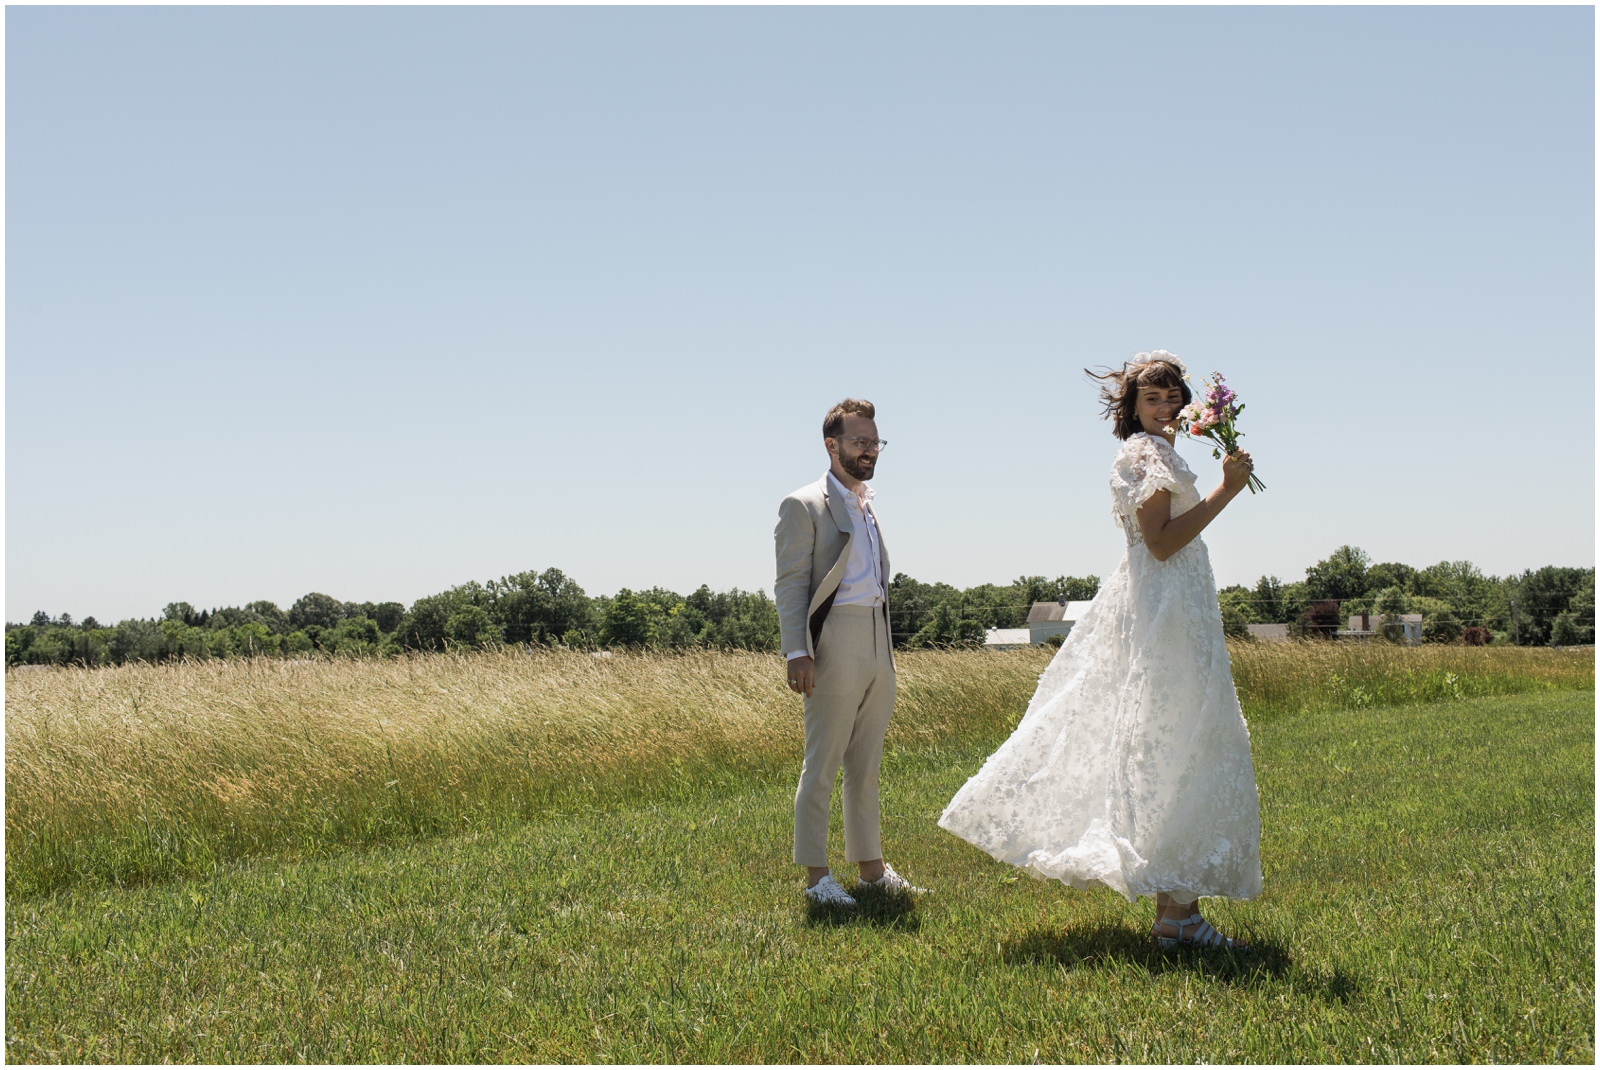 Adam Lowe Photography, Wedding, Cleveland, Ohio, Outdoor, stylish, hipster wedding, fashion, editorial, DIY wedding 